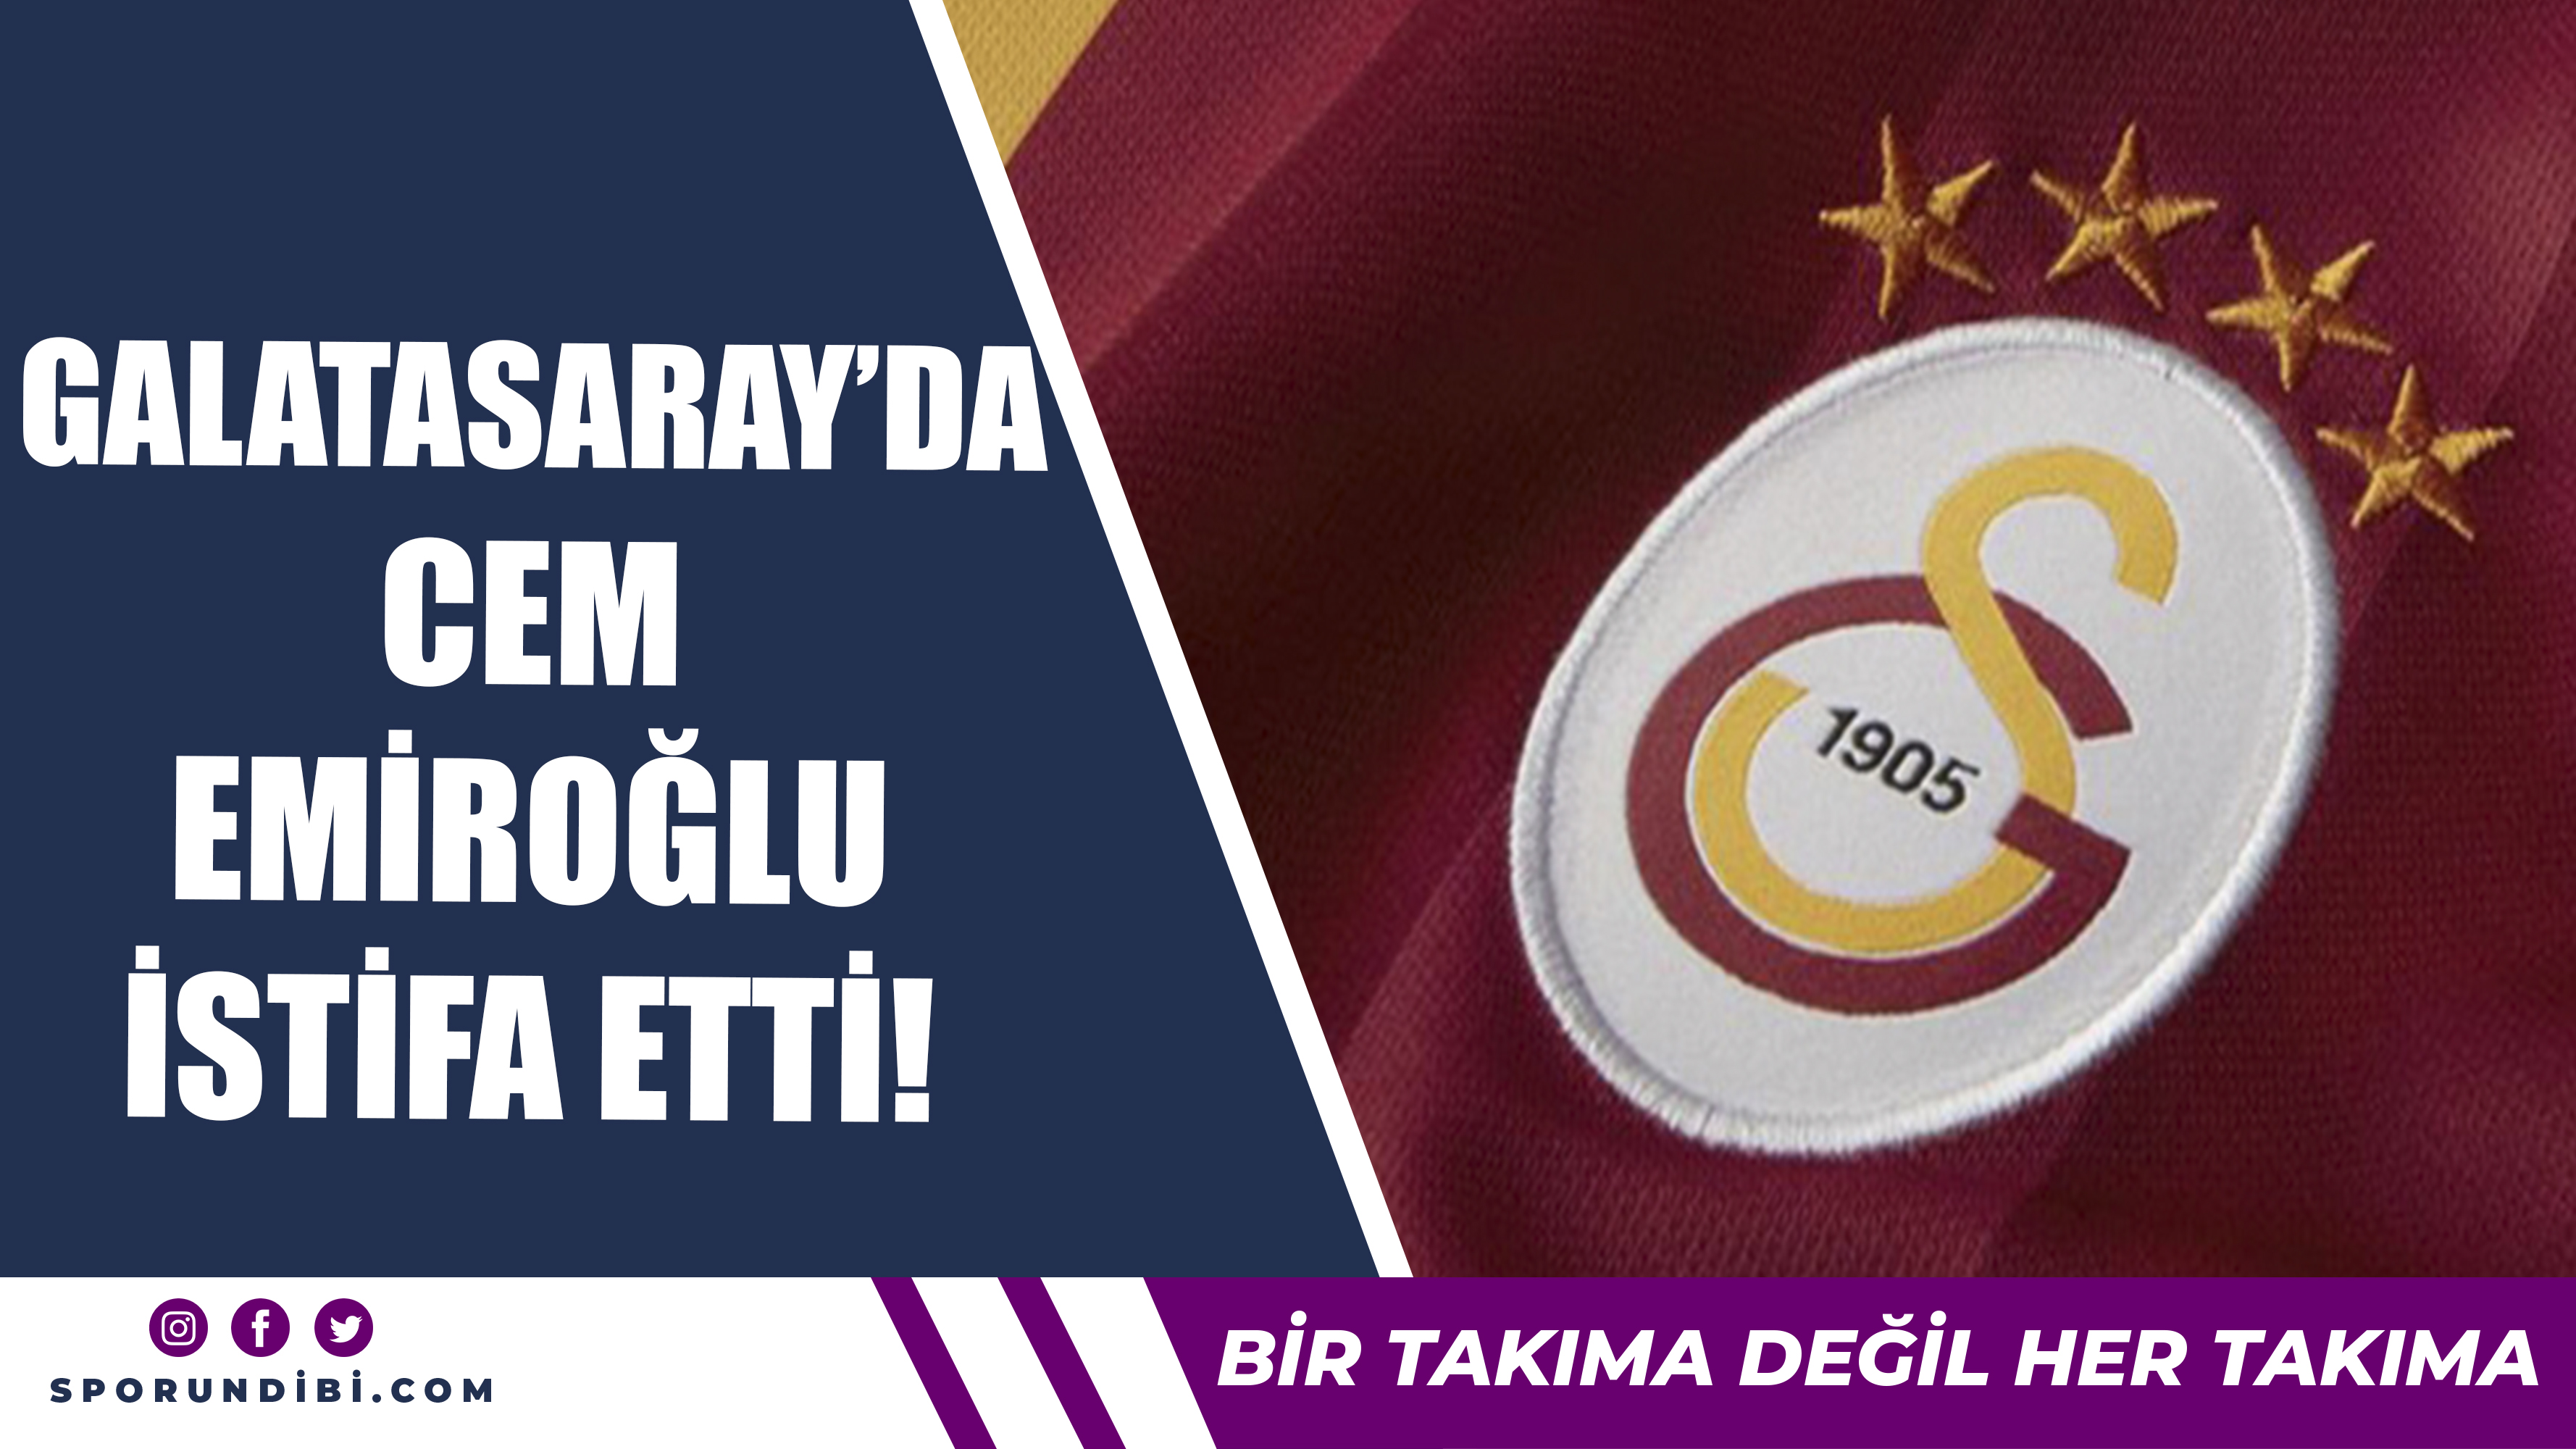 Galatasaray'da Cem Emiroğlu İstifa Etti!